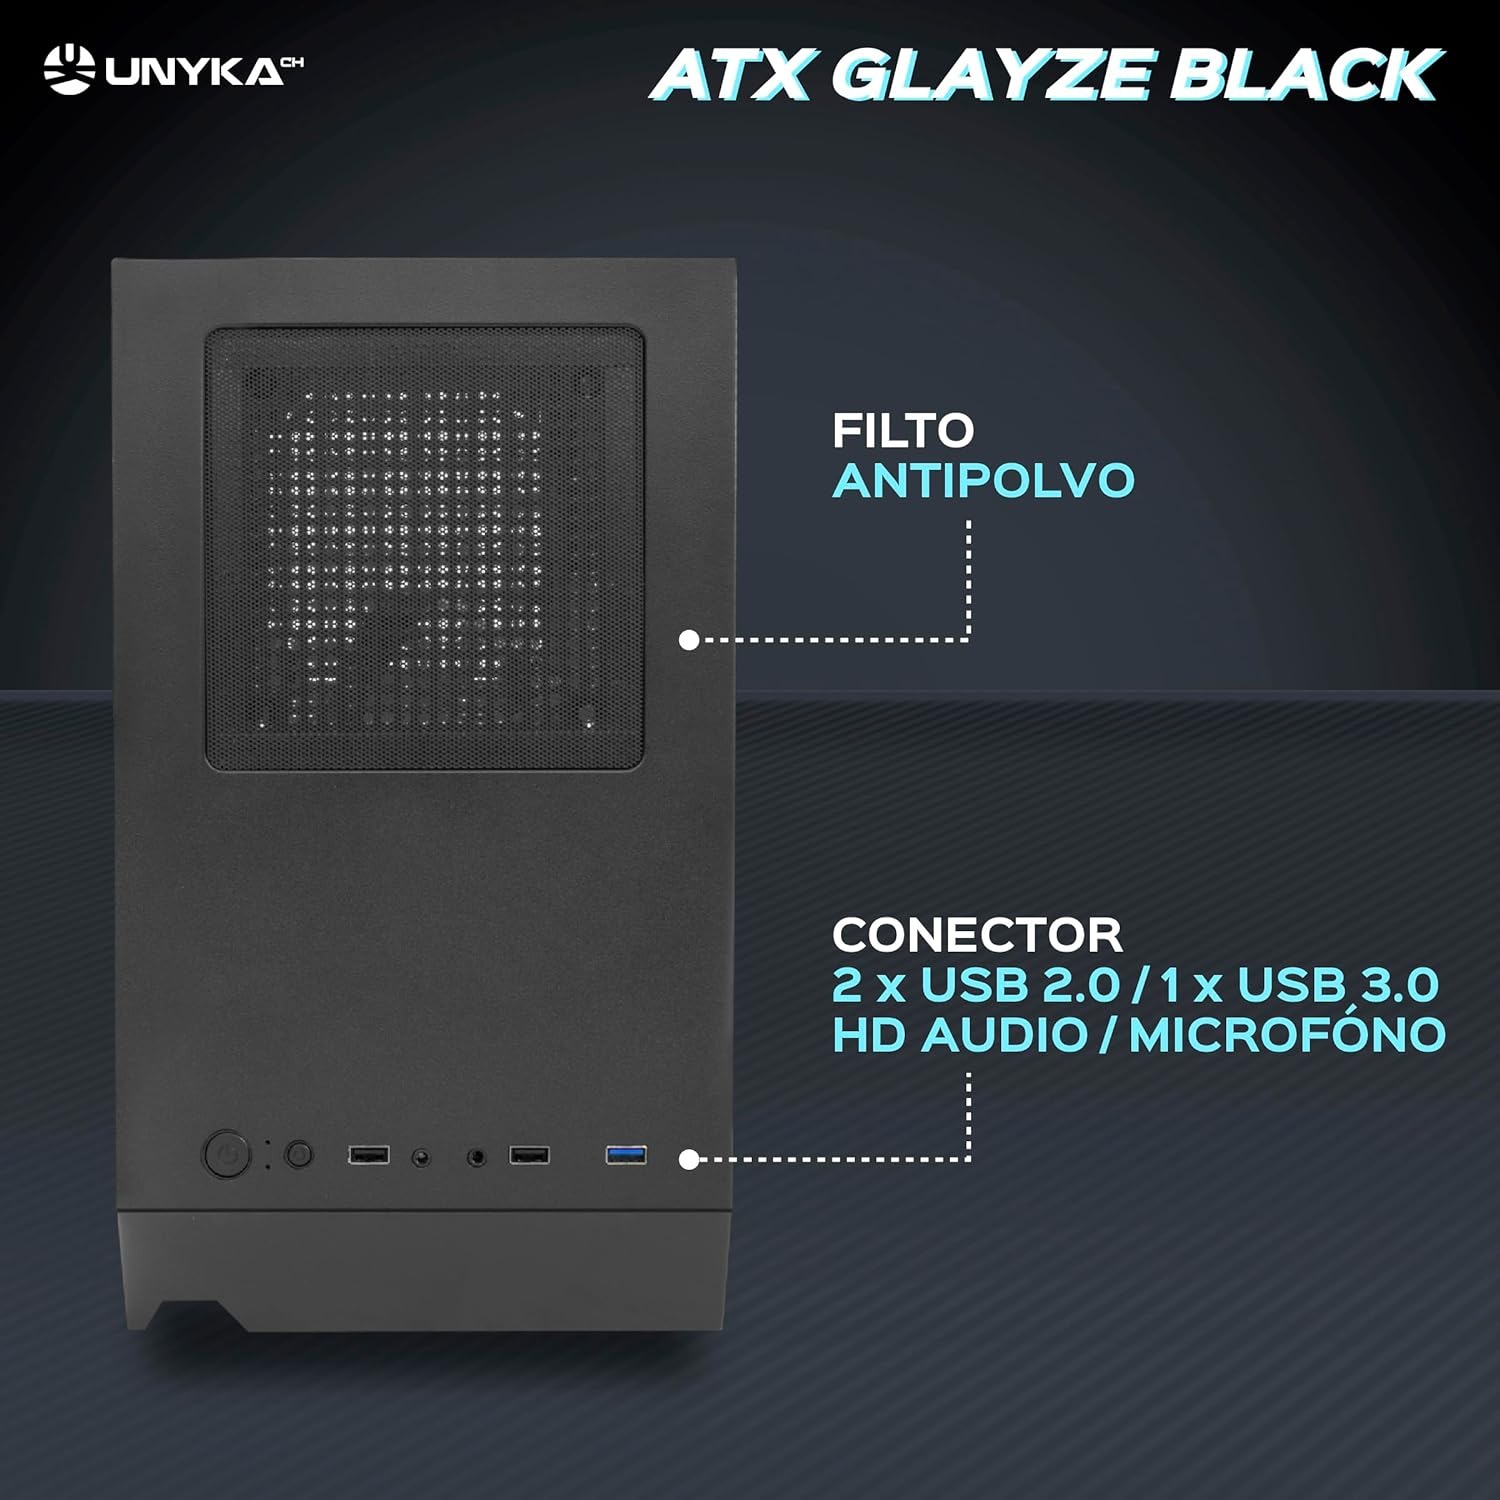 ATX Glayze Black Negra Ventana cristal - 1888